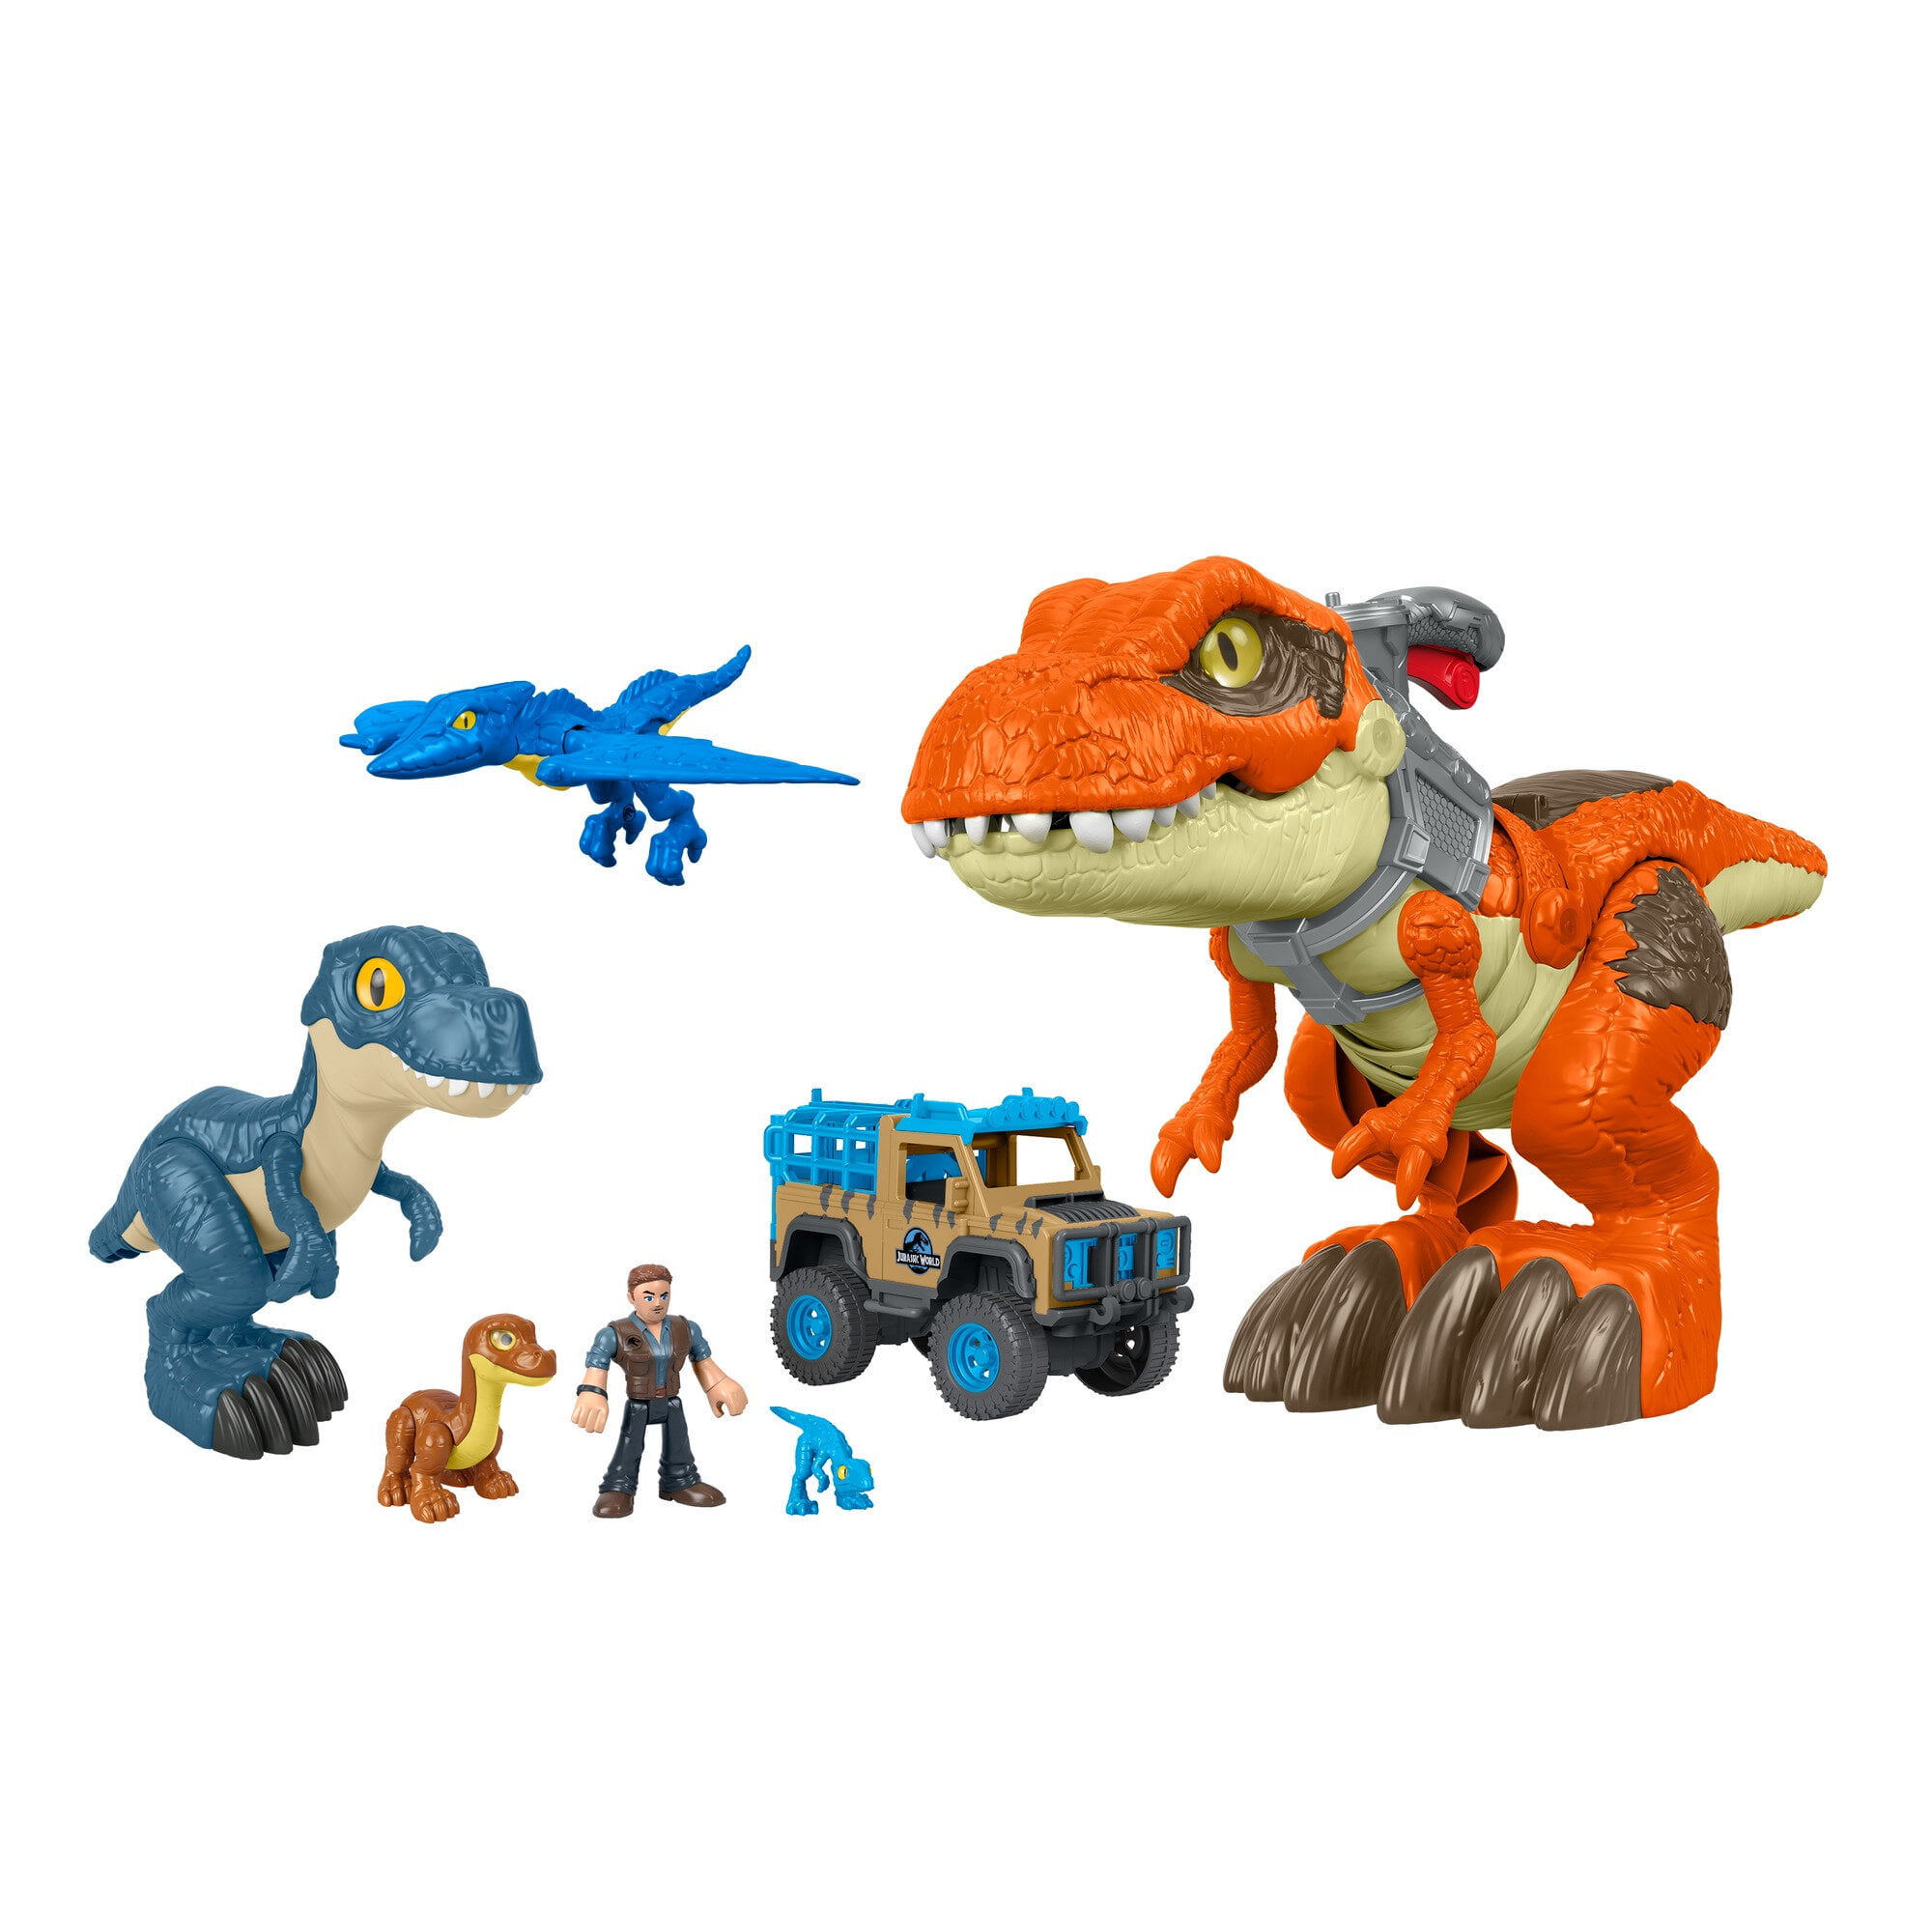 Giga Pets AR T-Rex Dinosaur Virtual Digital Electronic Pet iPhone Android App 